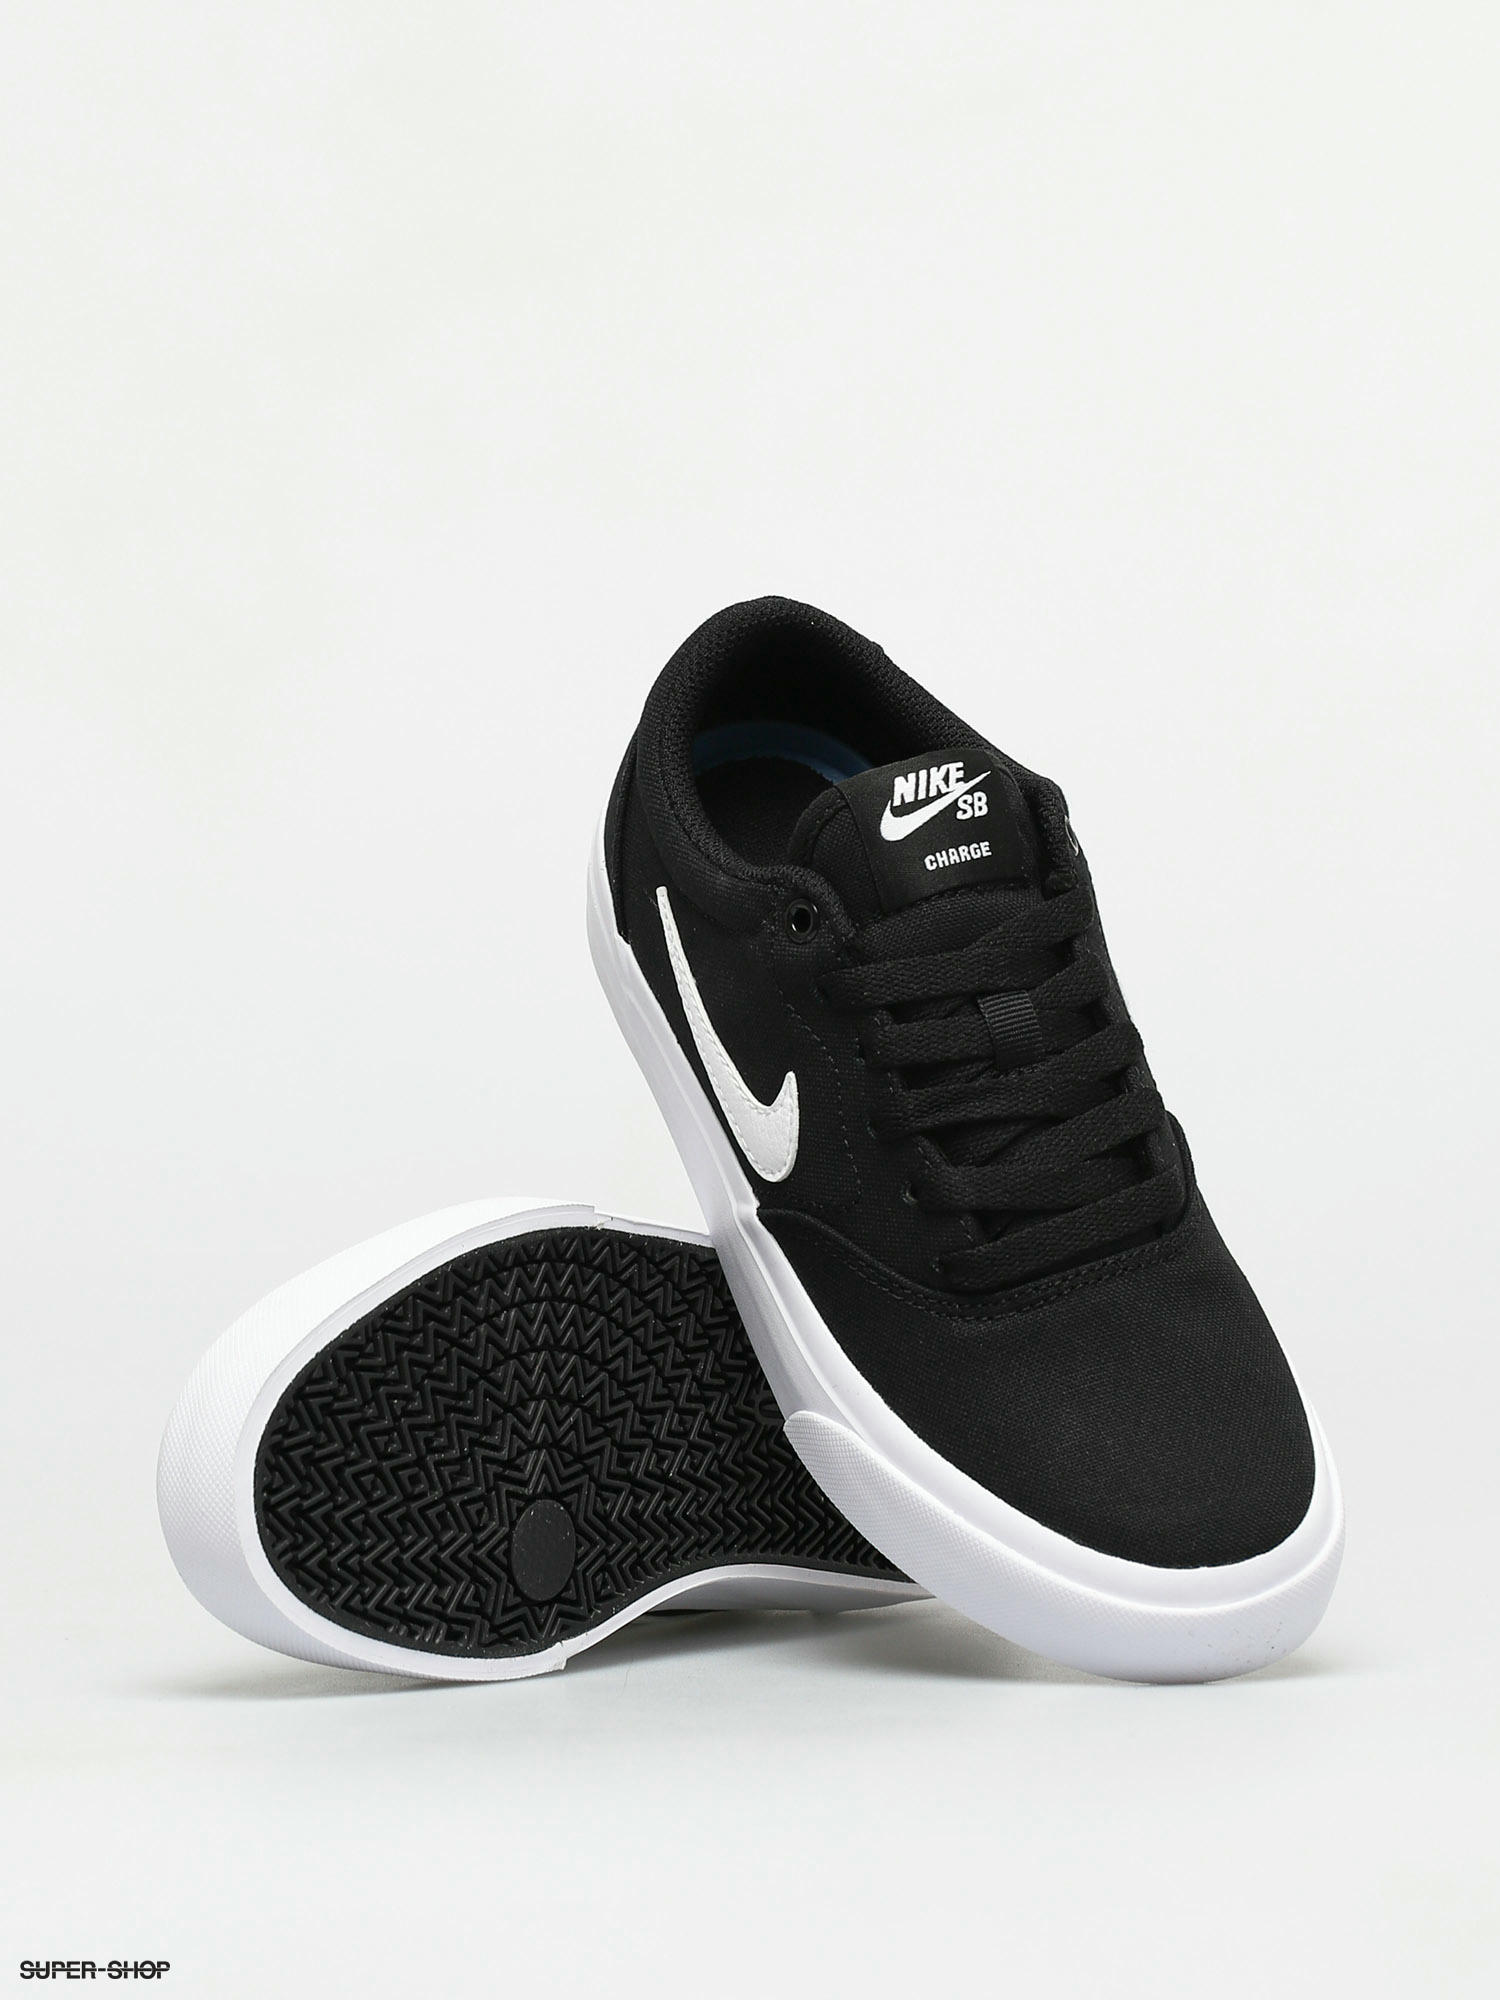 Vooruit spannend Elektronisch Nike SB Charge Canvas Shoes (black/white black)